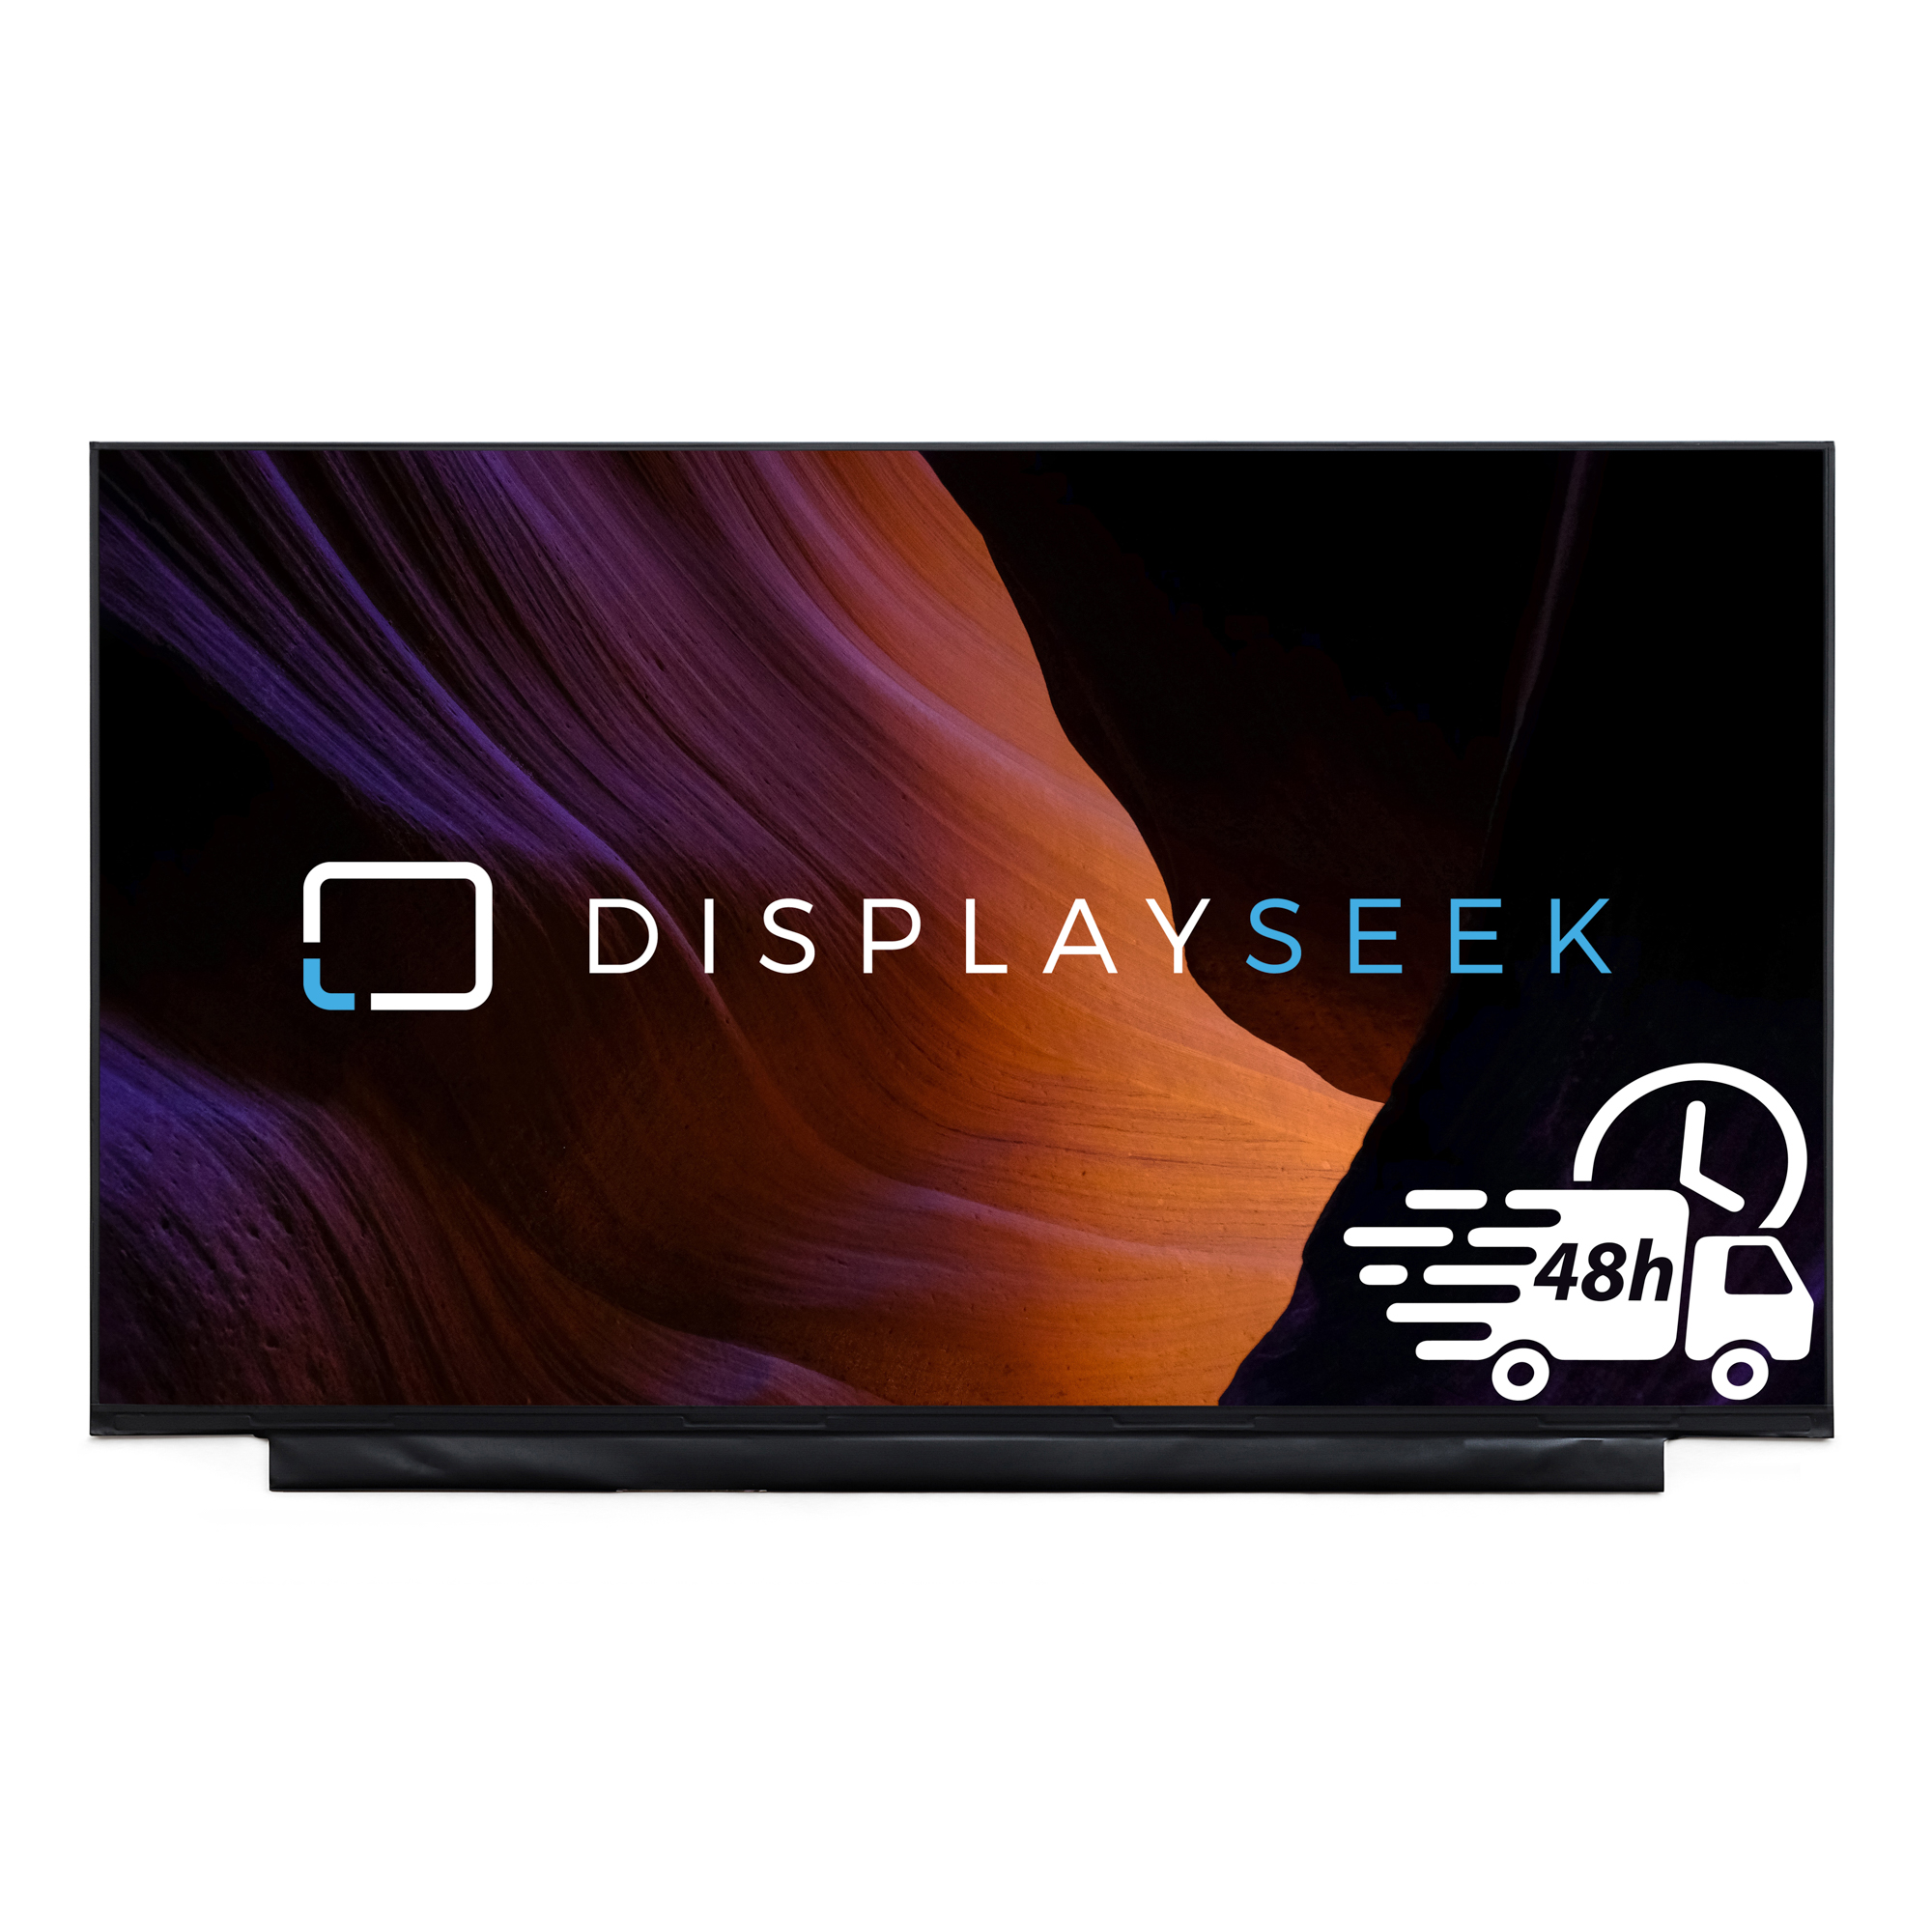 Asus TUF 505 LCD 15.6" FHD Display Dalle Ecran Livraison 24h